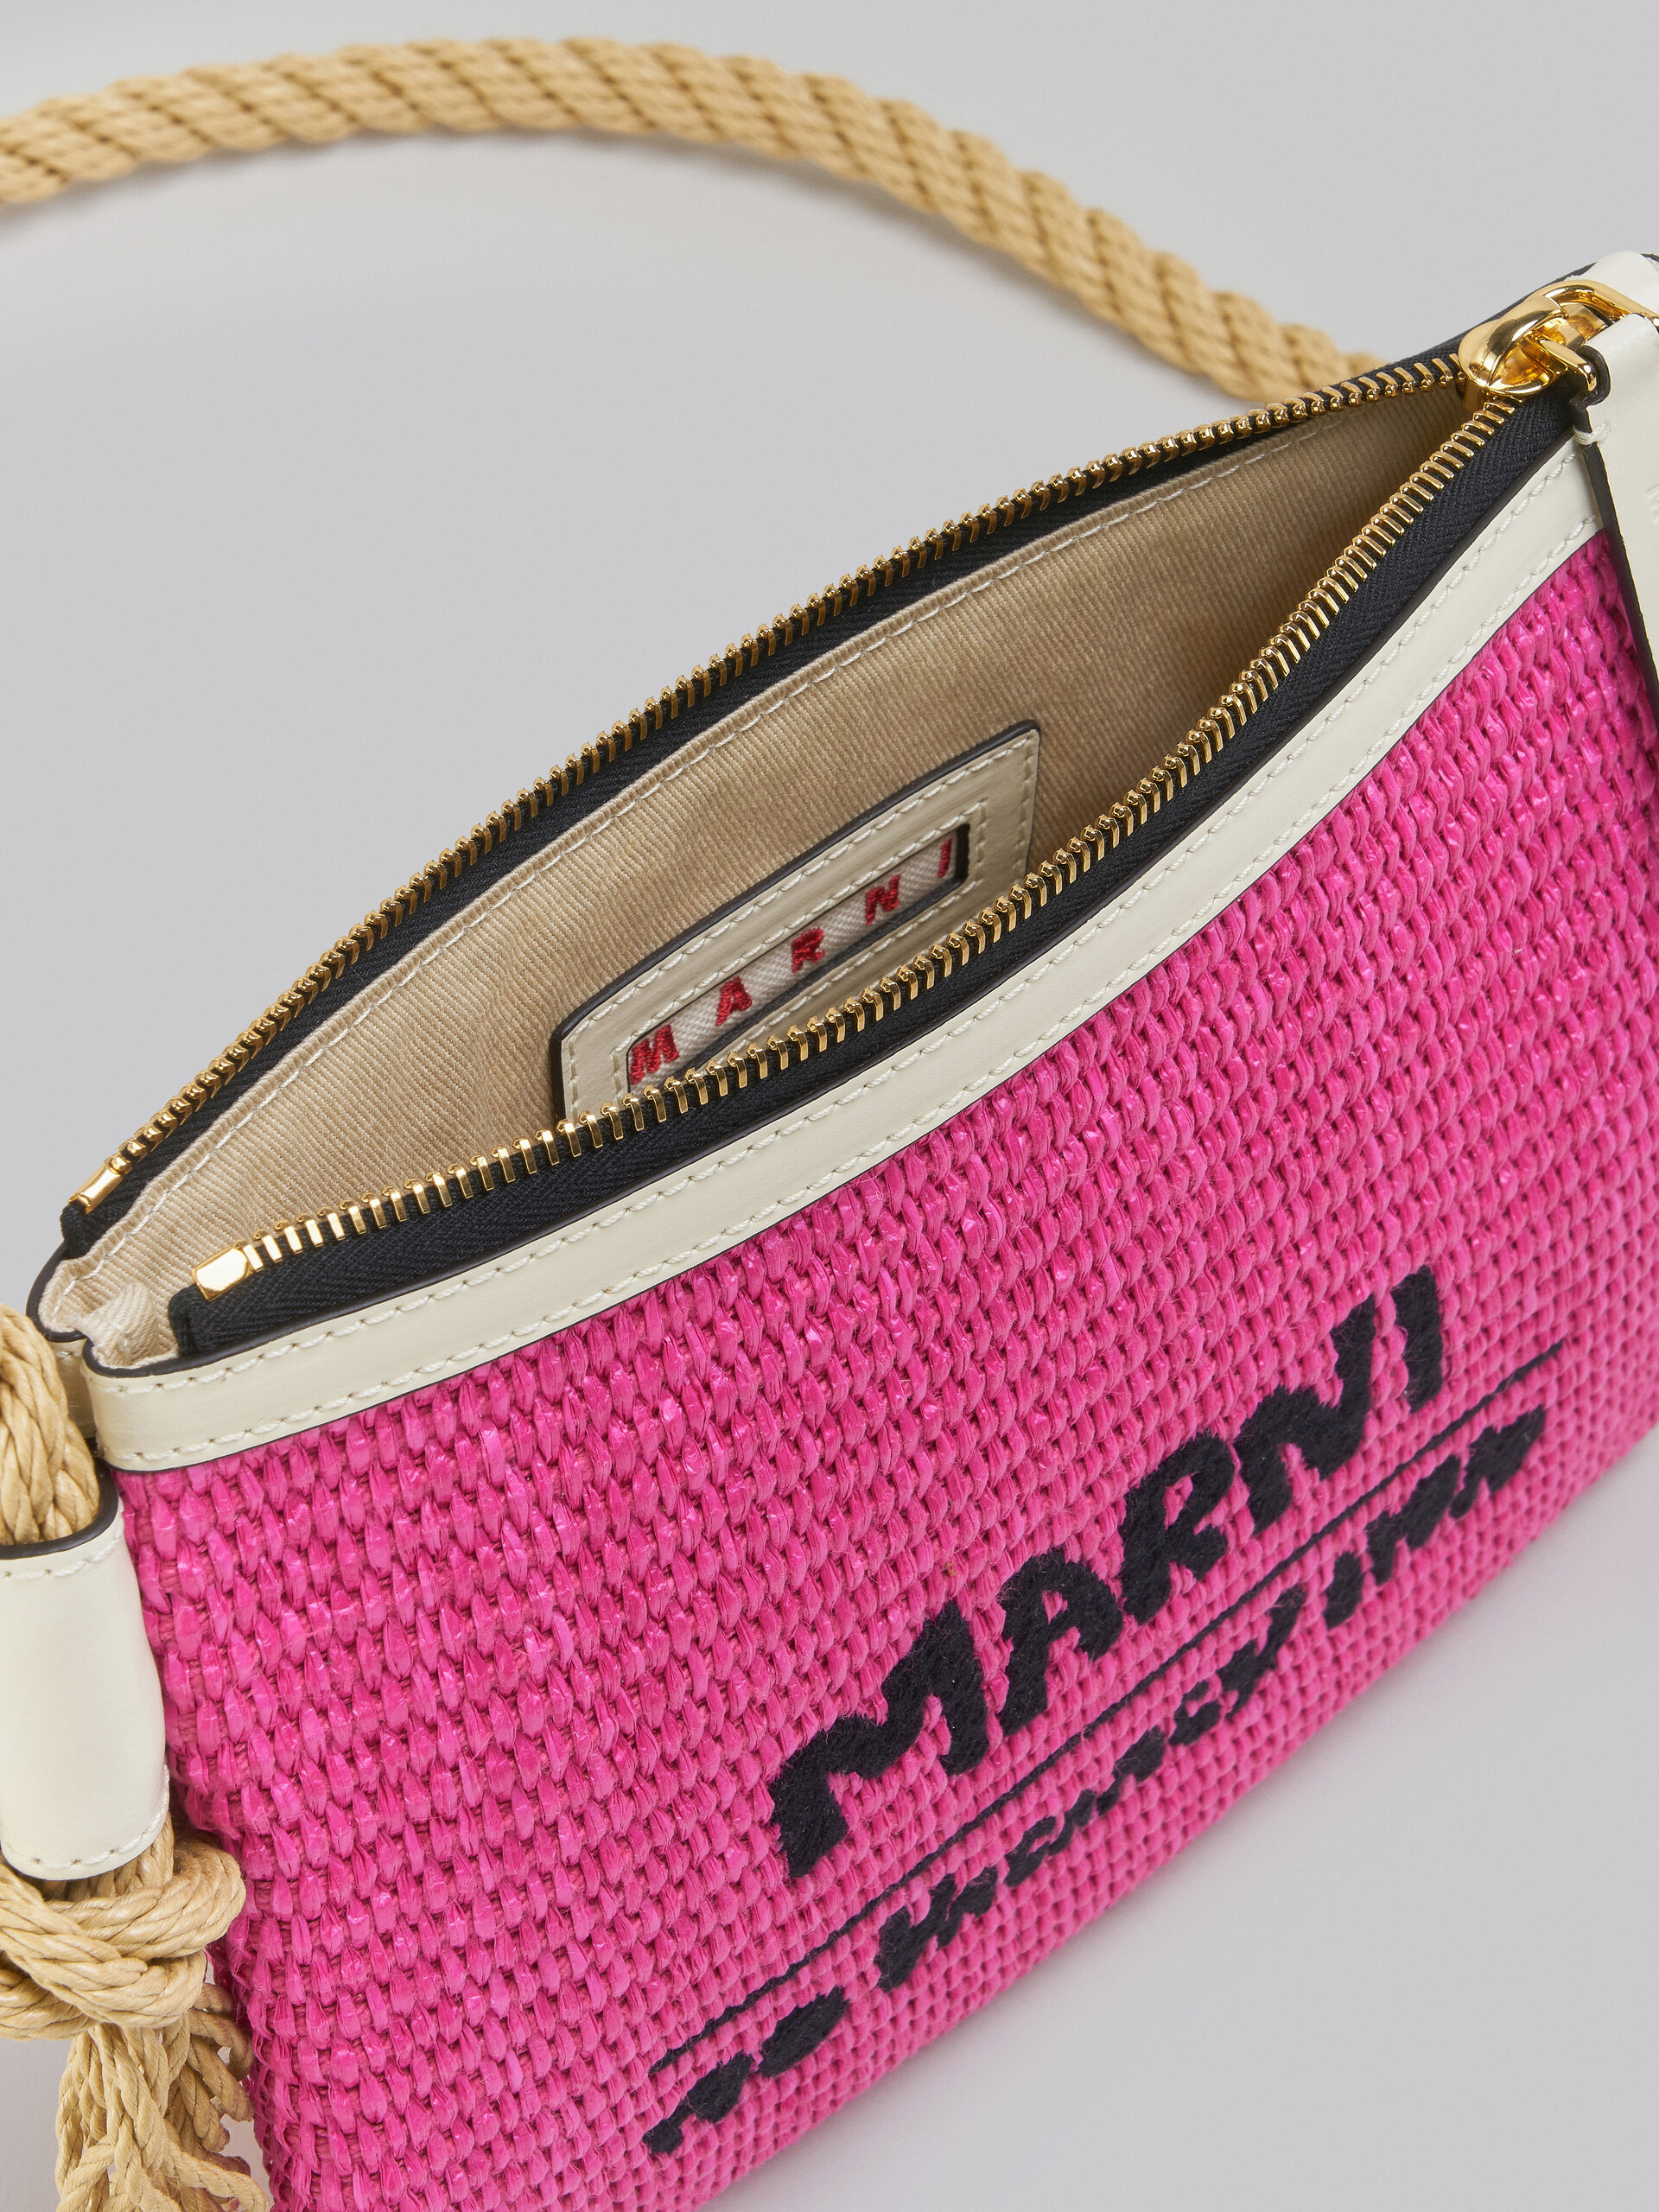 Marni x No Vacancy Inn - Marcel Zip Pouch in pink raffia with white trims - Pochette - Image 4